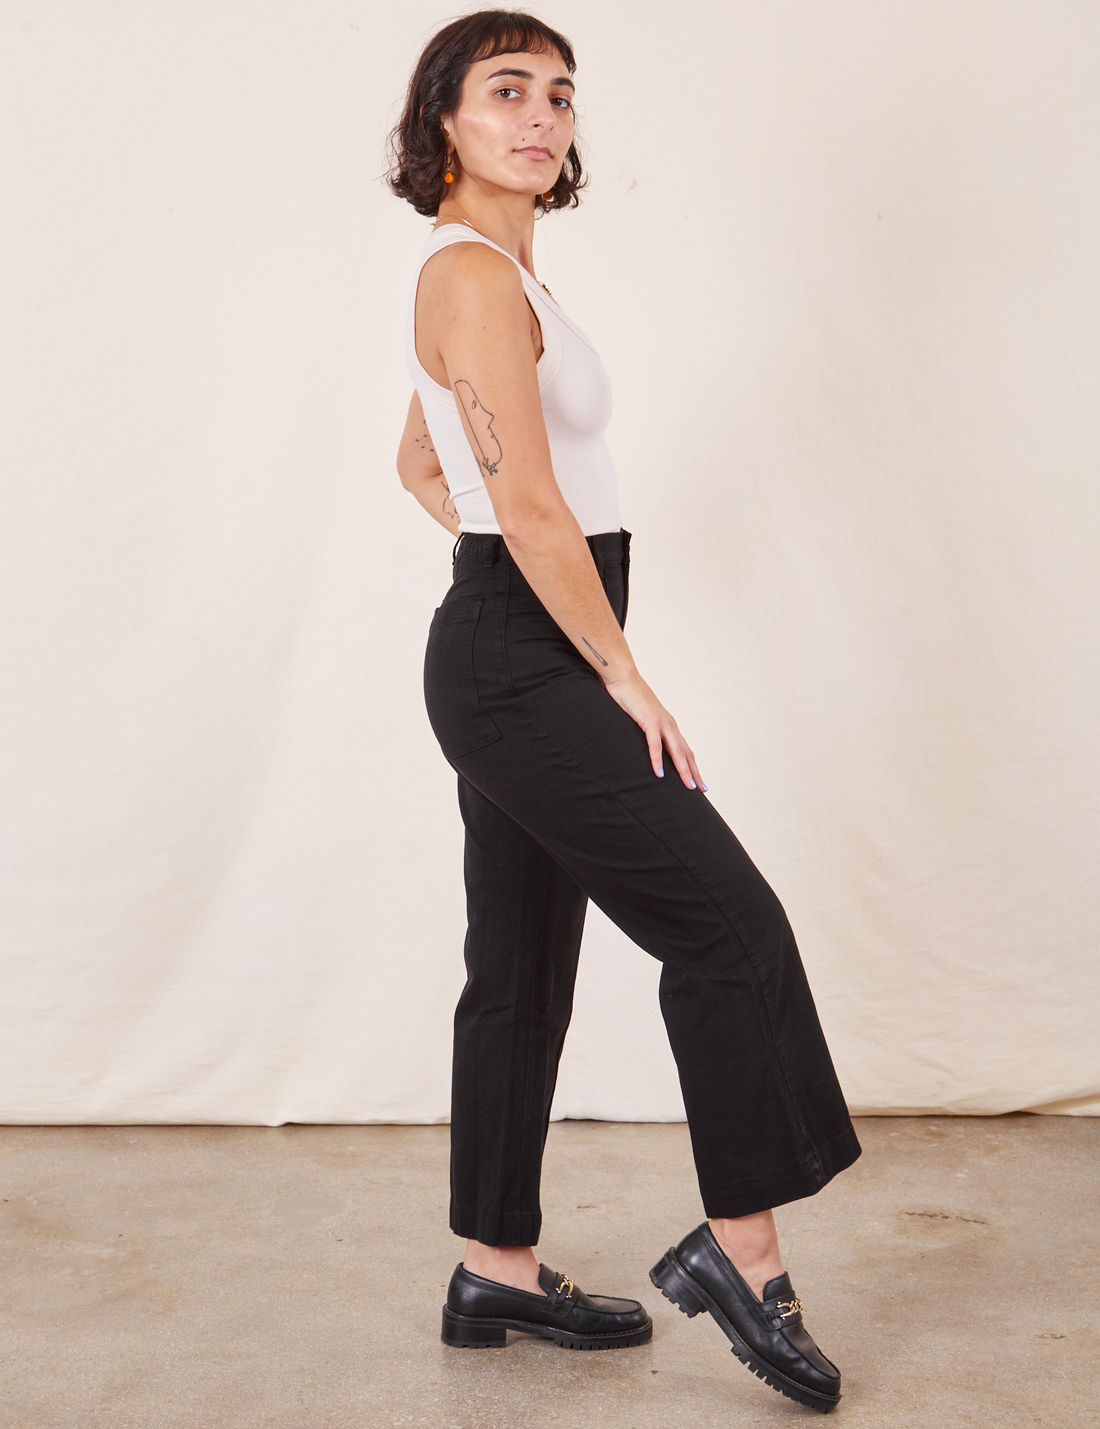 Western Pants in Basic Black side view on Soraya wearing a vintage off-white Tank Top